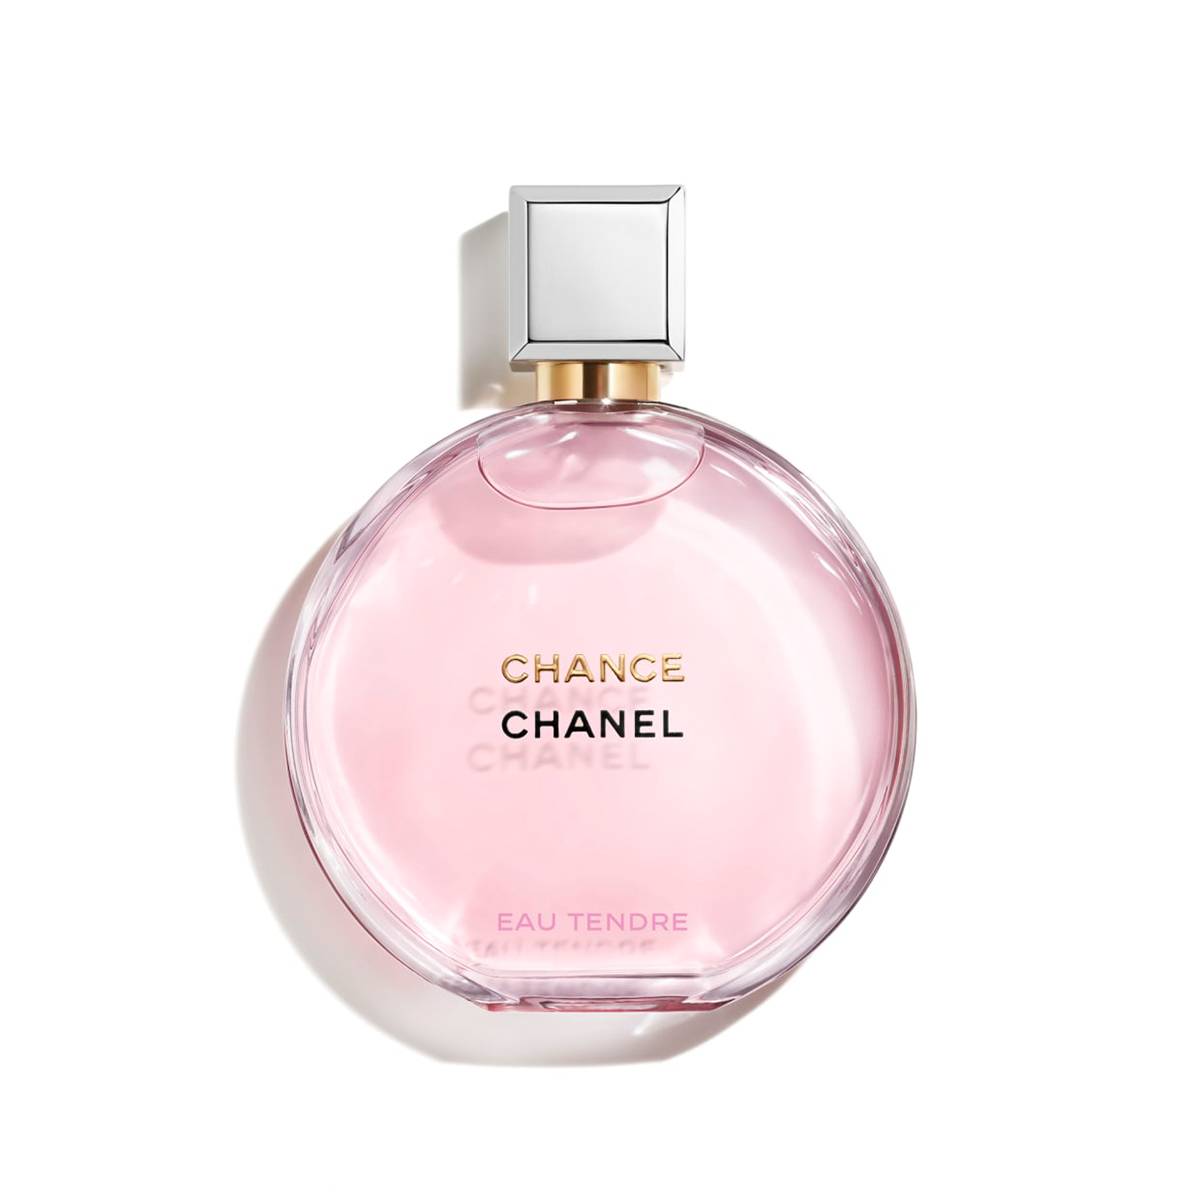  Chanel, Chance. 